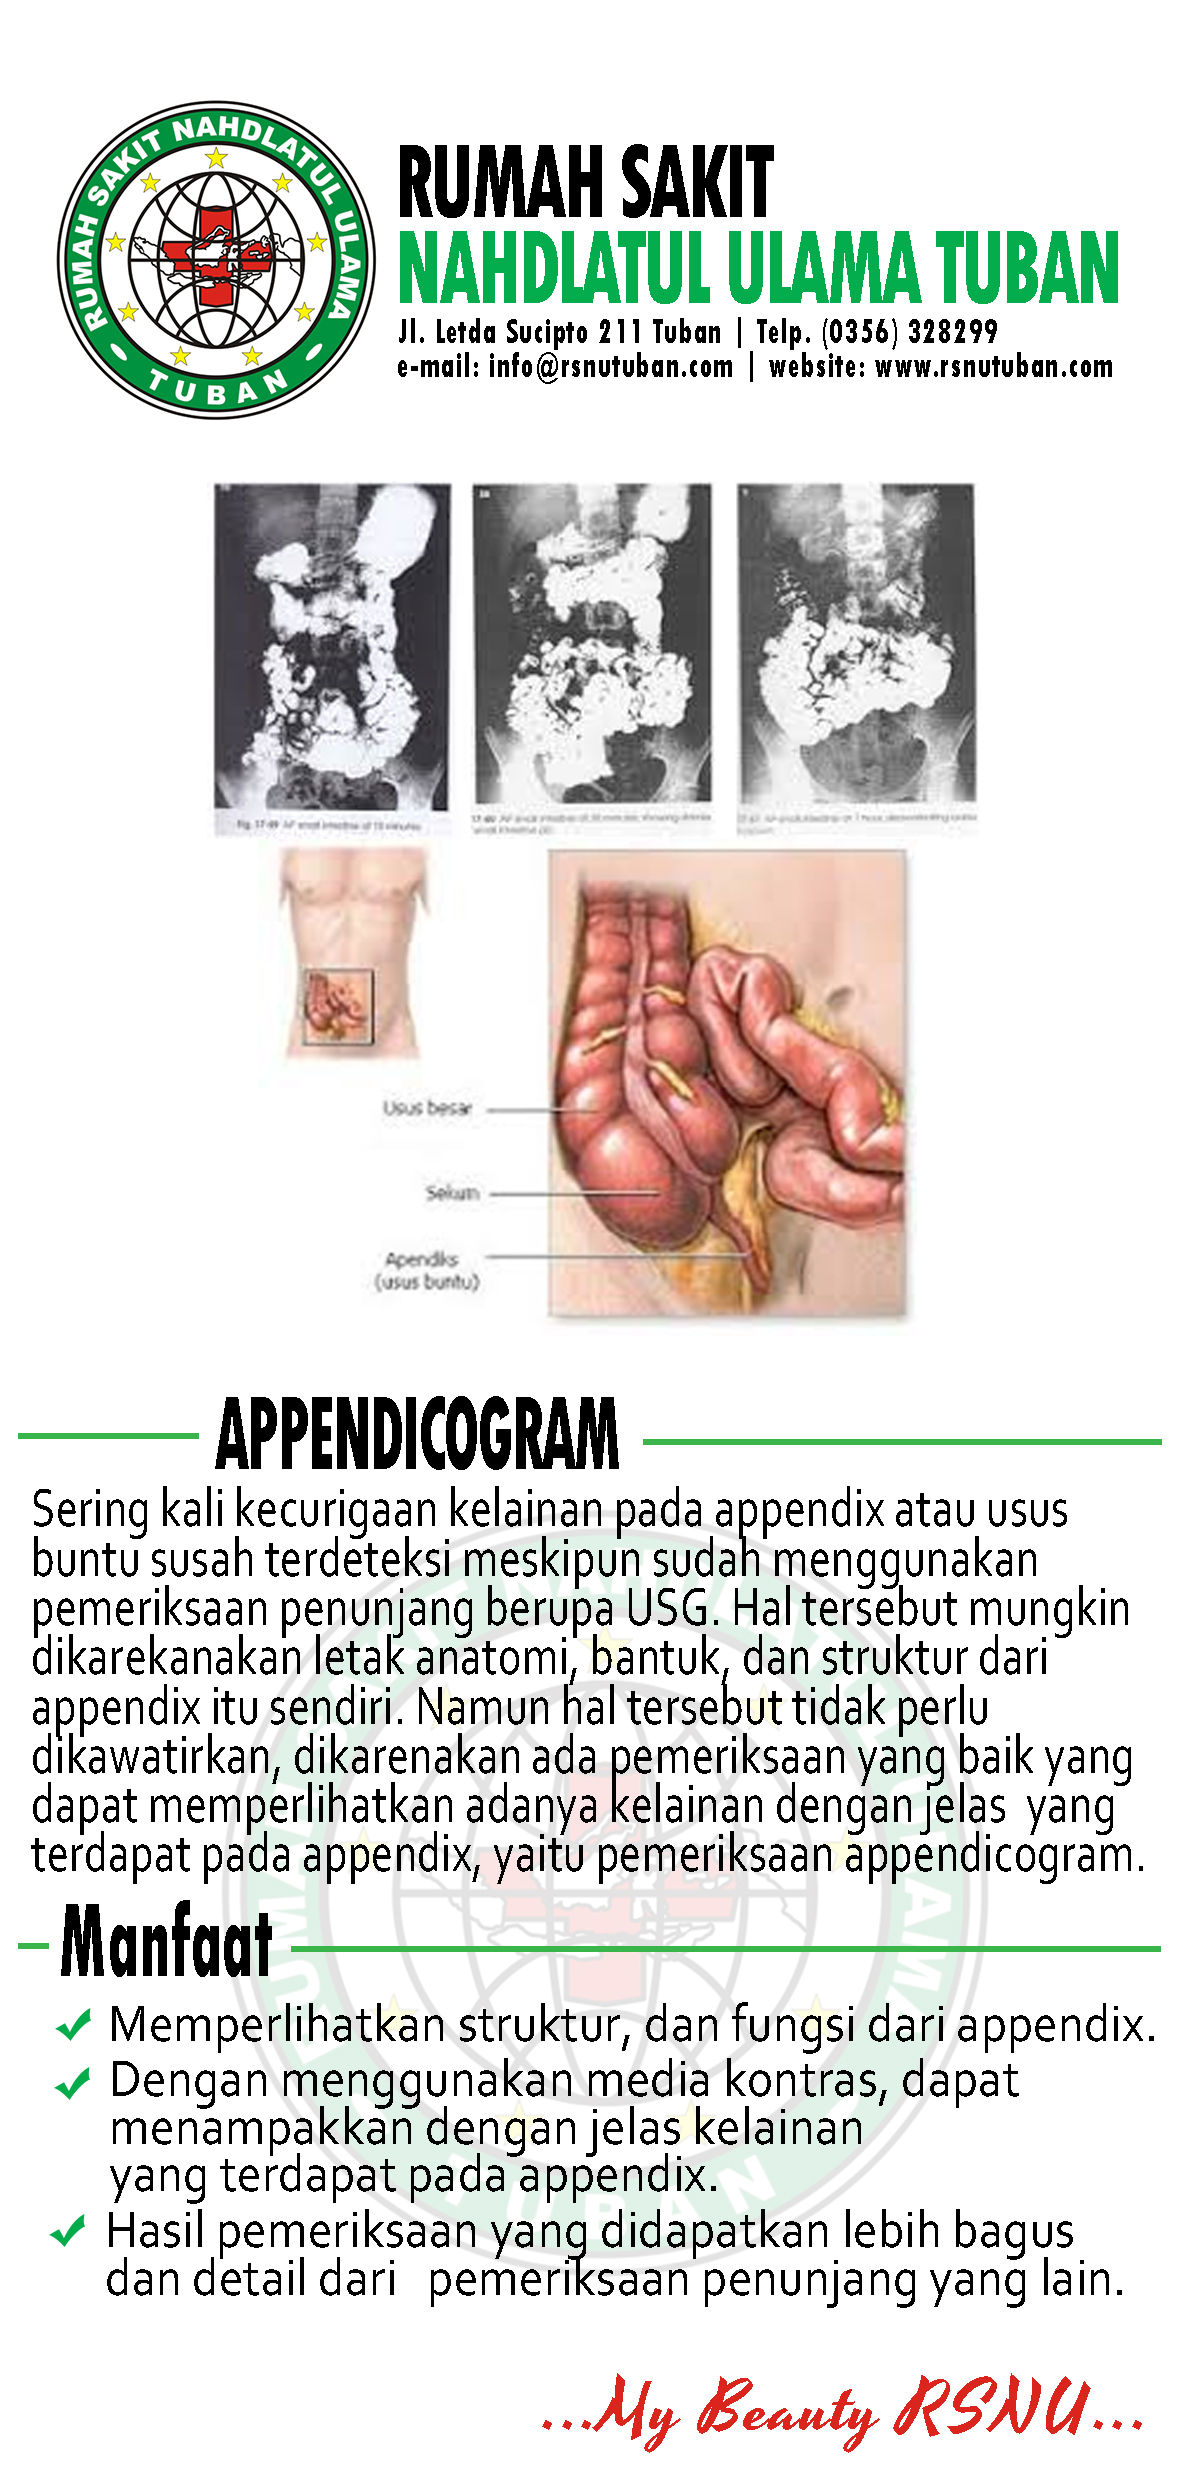 Brosur Appendicogram - RSNU Tuban